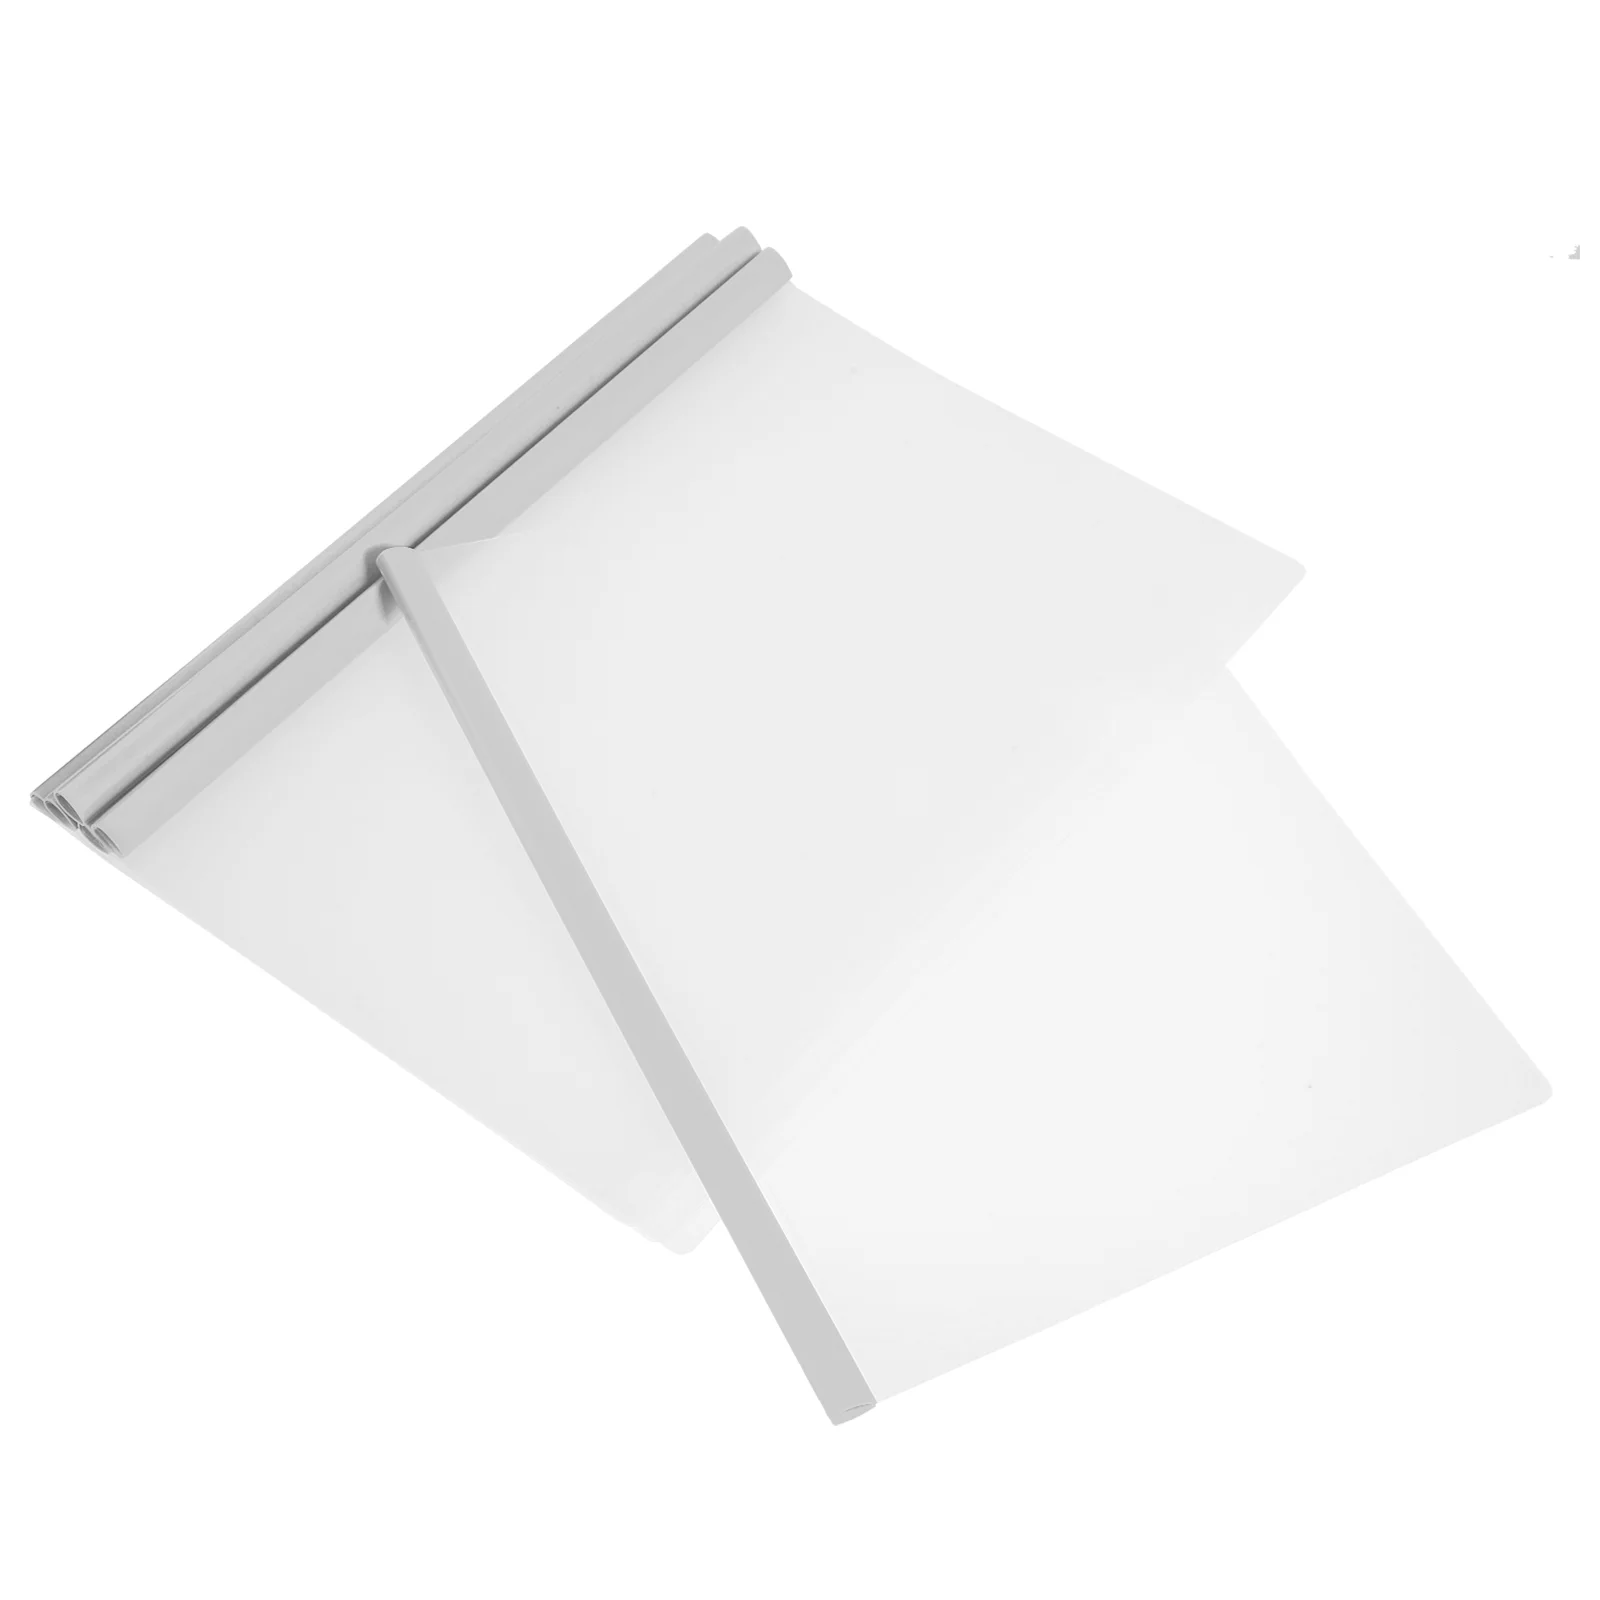 

10 Pcs Presentation Folder Binder Clip Paper Portfolio Clips Report Covers Book Clear Folders